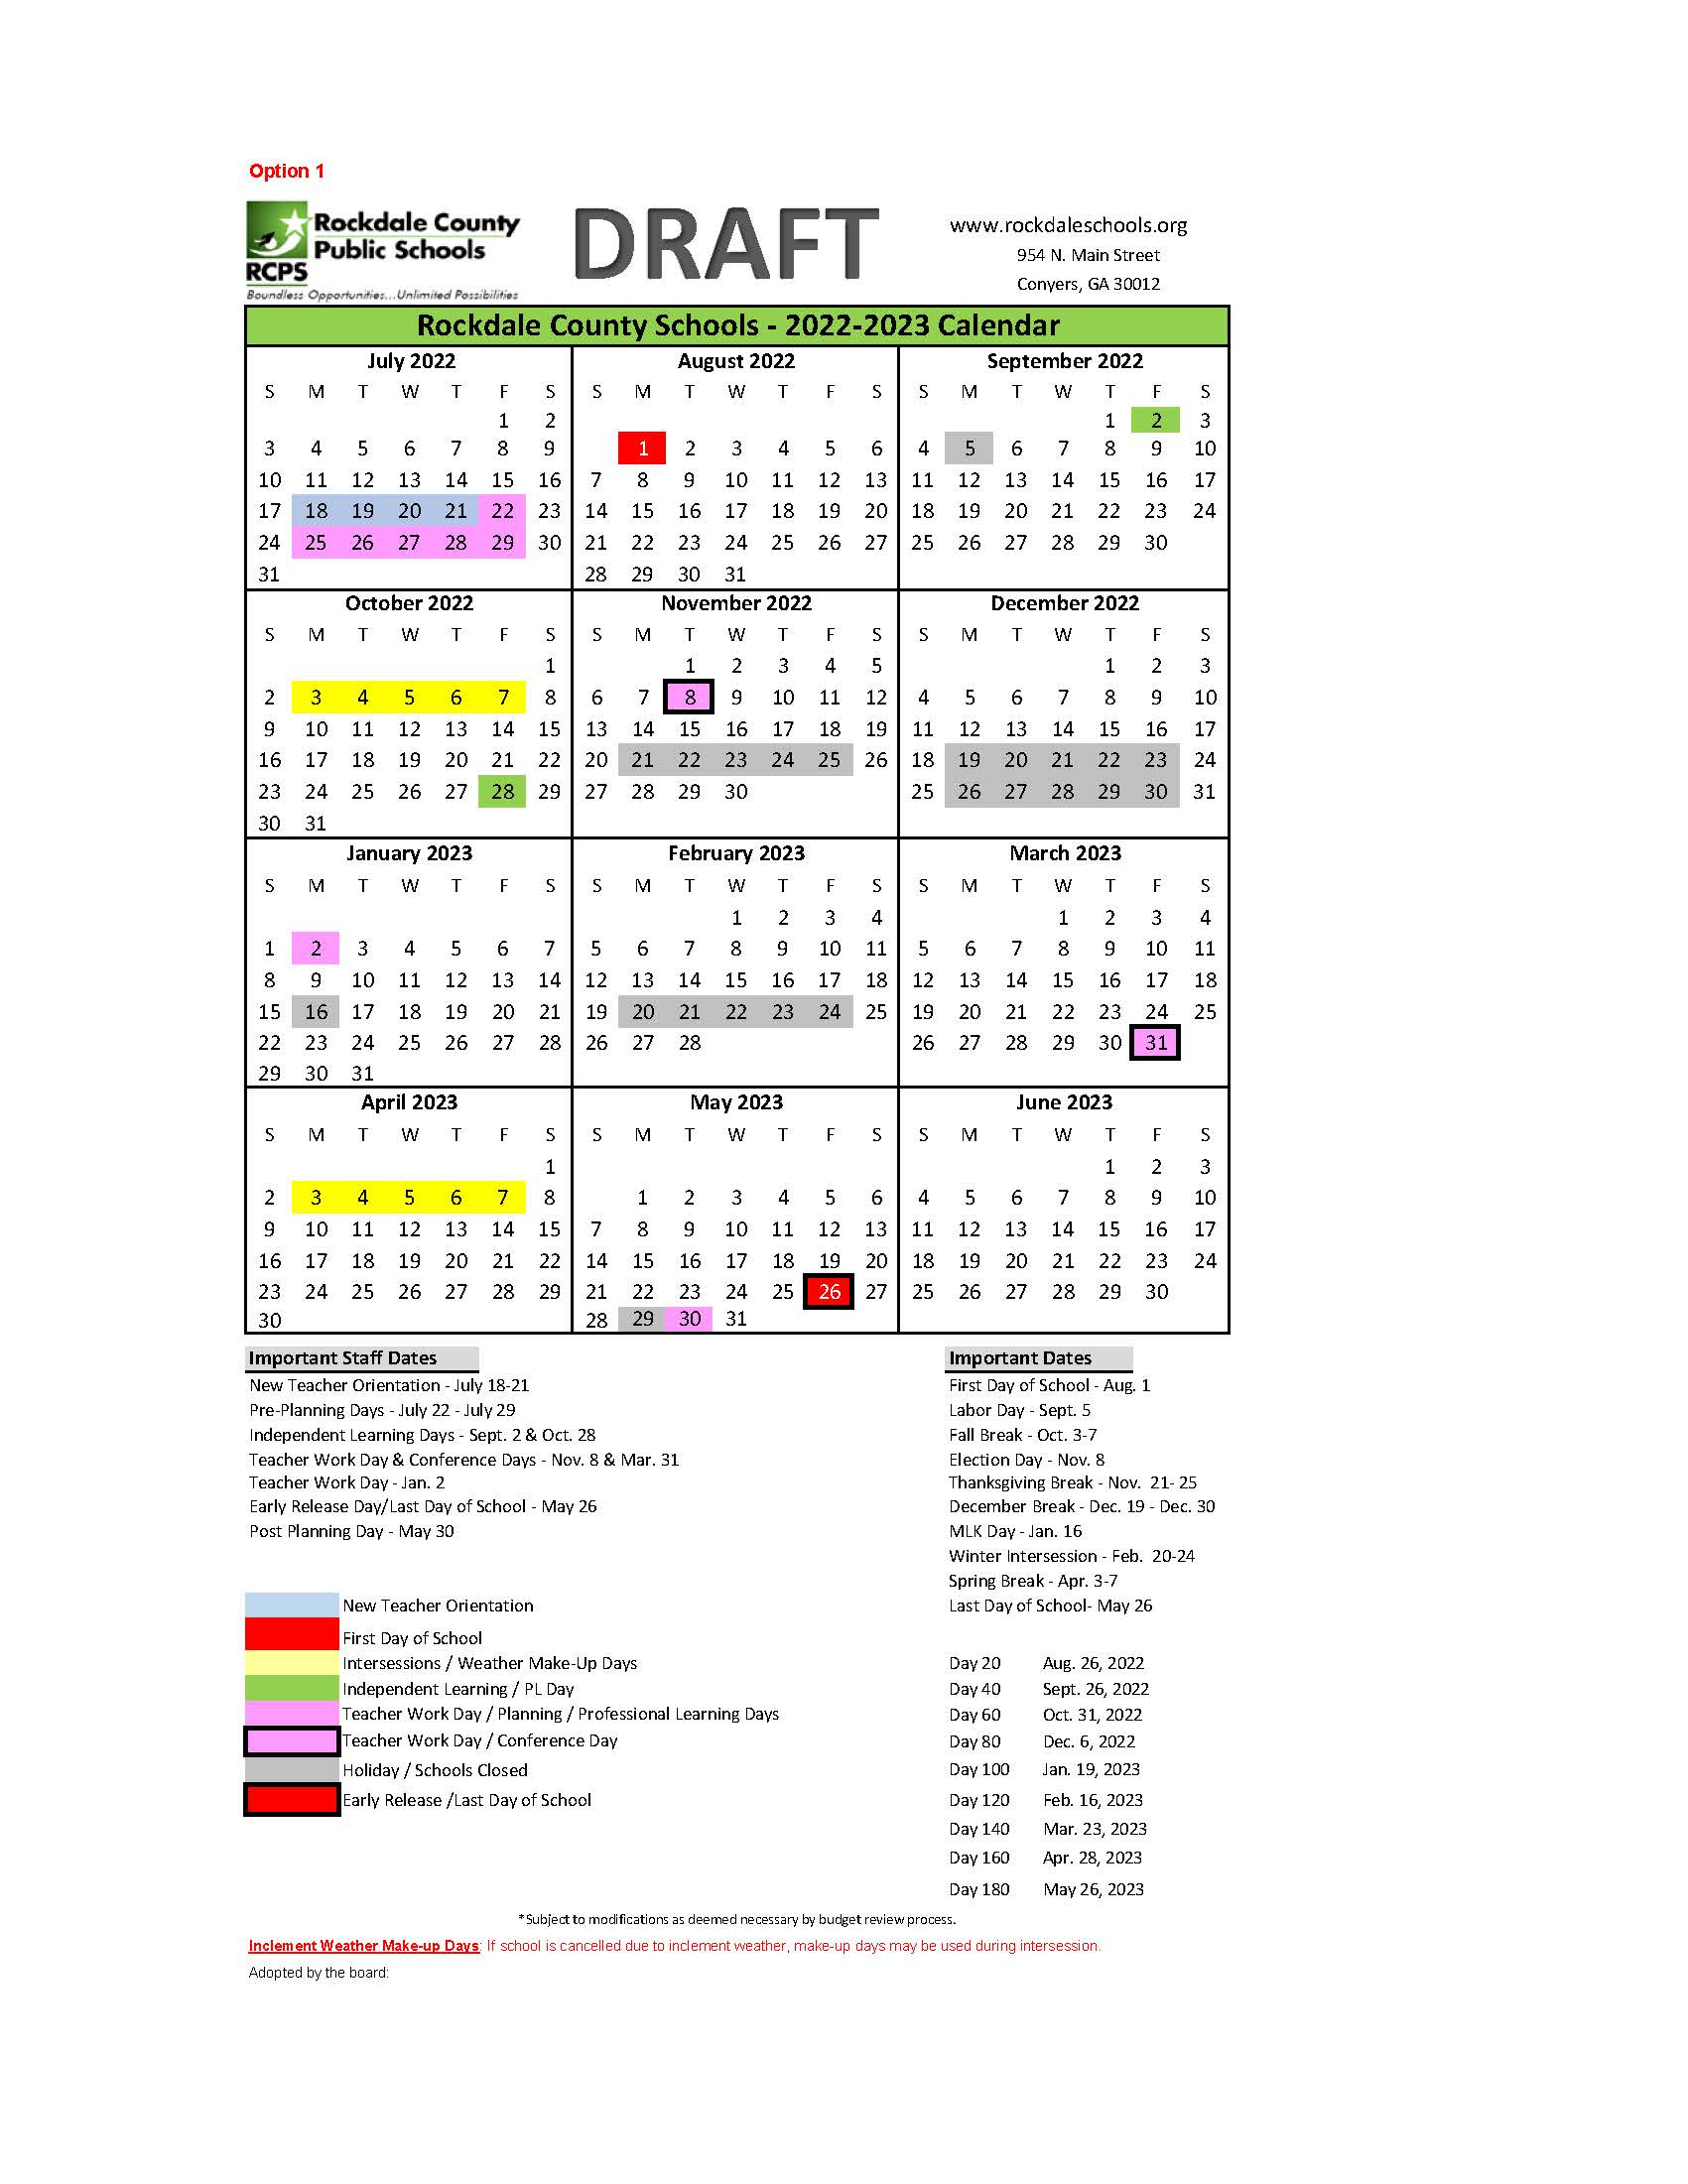 Rockdale County Schools Calendar 2022 16 2022 - Schoolcalendars.net